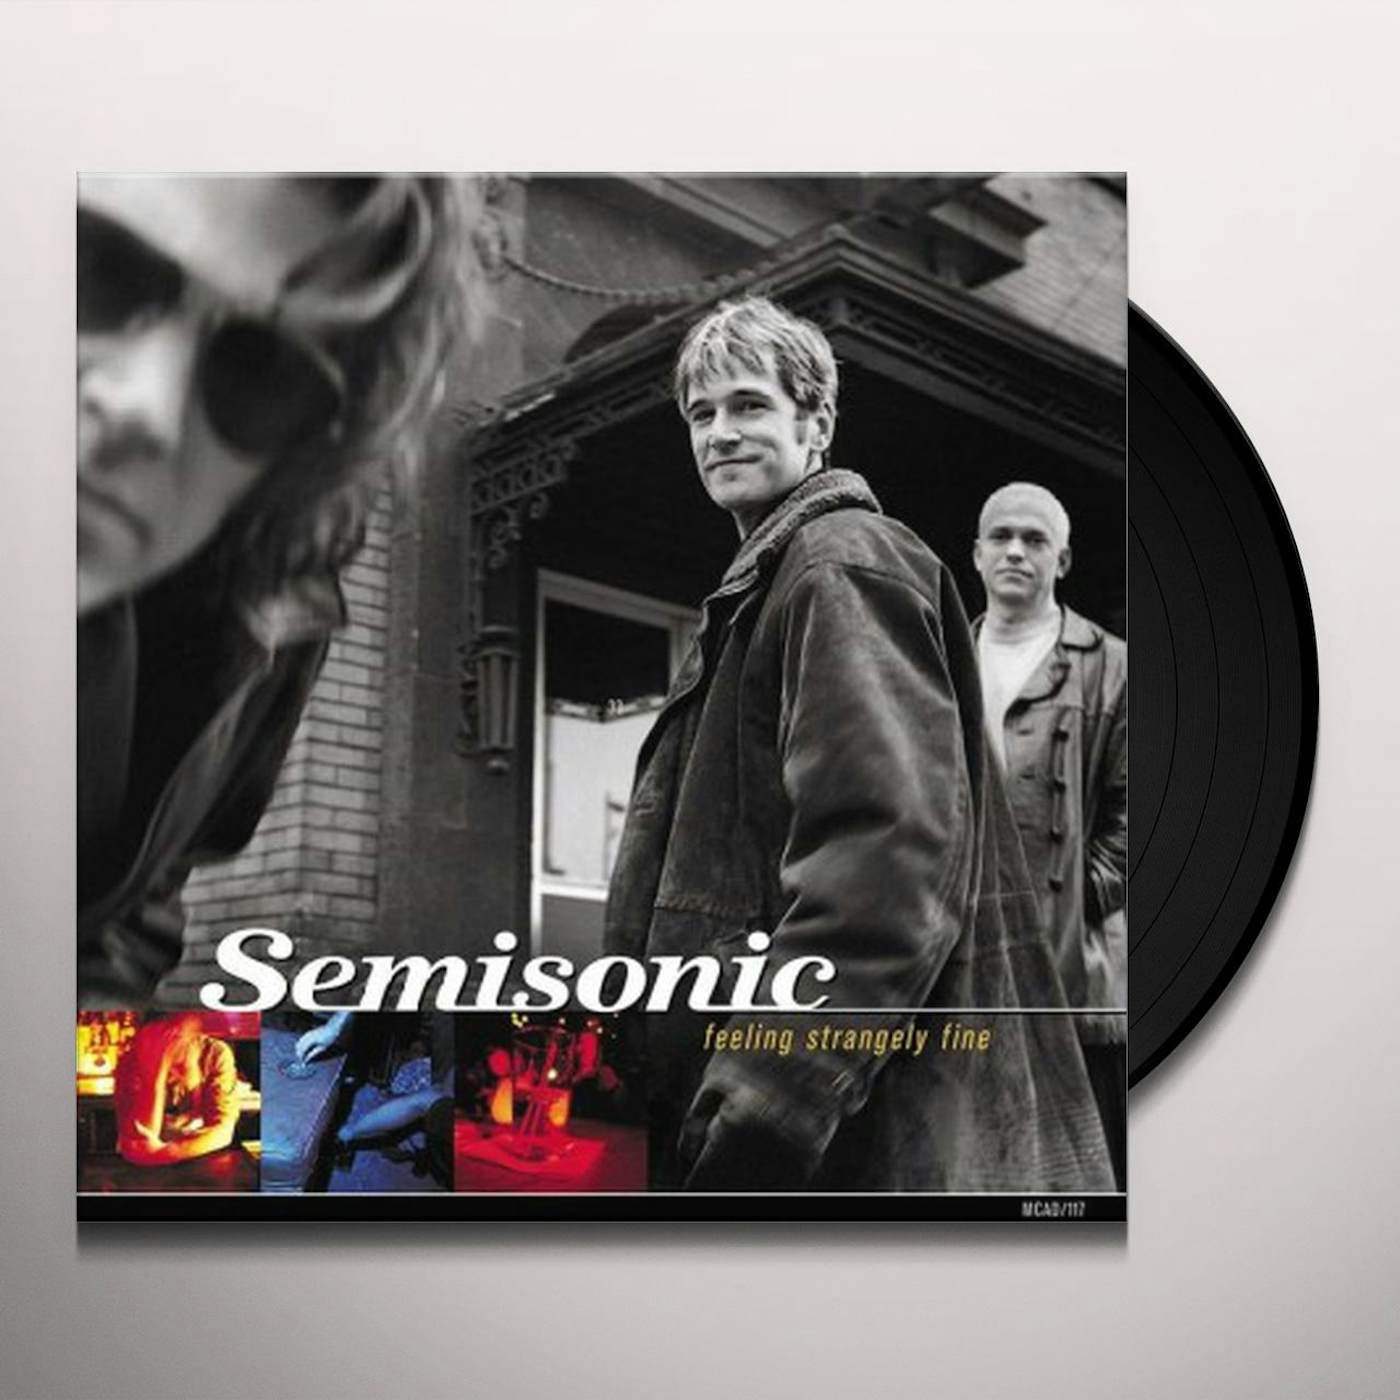 Semisonic FEELING STRANGELY FINE (20TH ANNIVERSARY EDITION) - Limited Edition 180 gram Double Vinyl Record